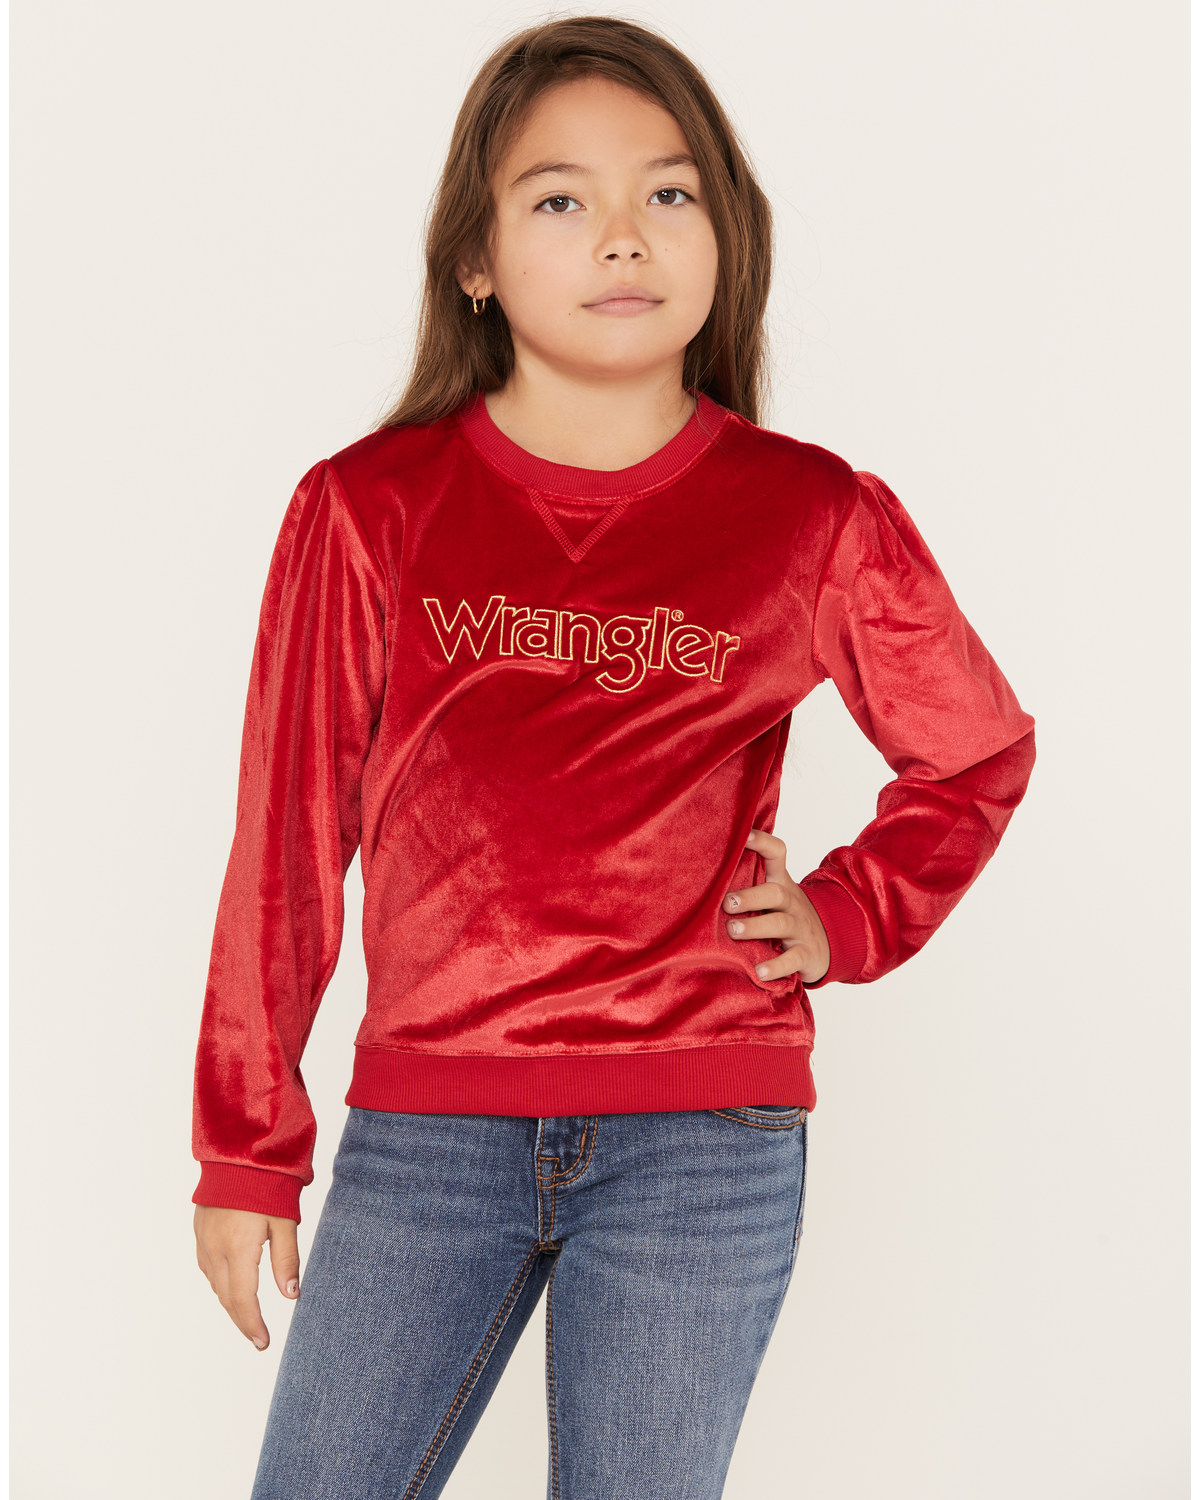 Wrangler Girls' Logo Graphic Sweatshirt